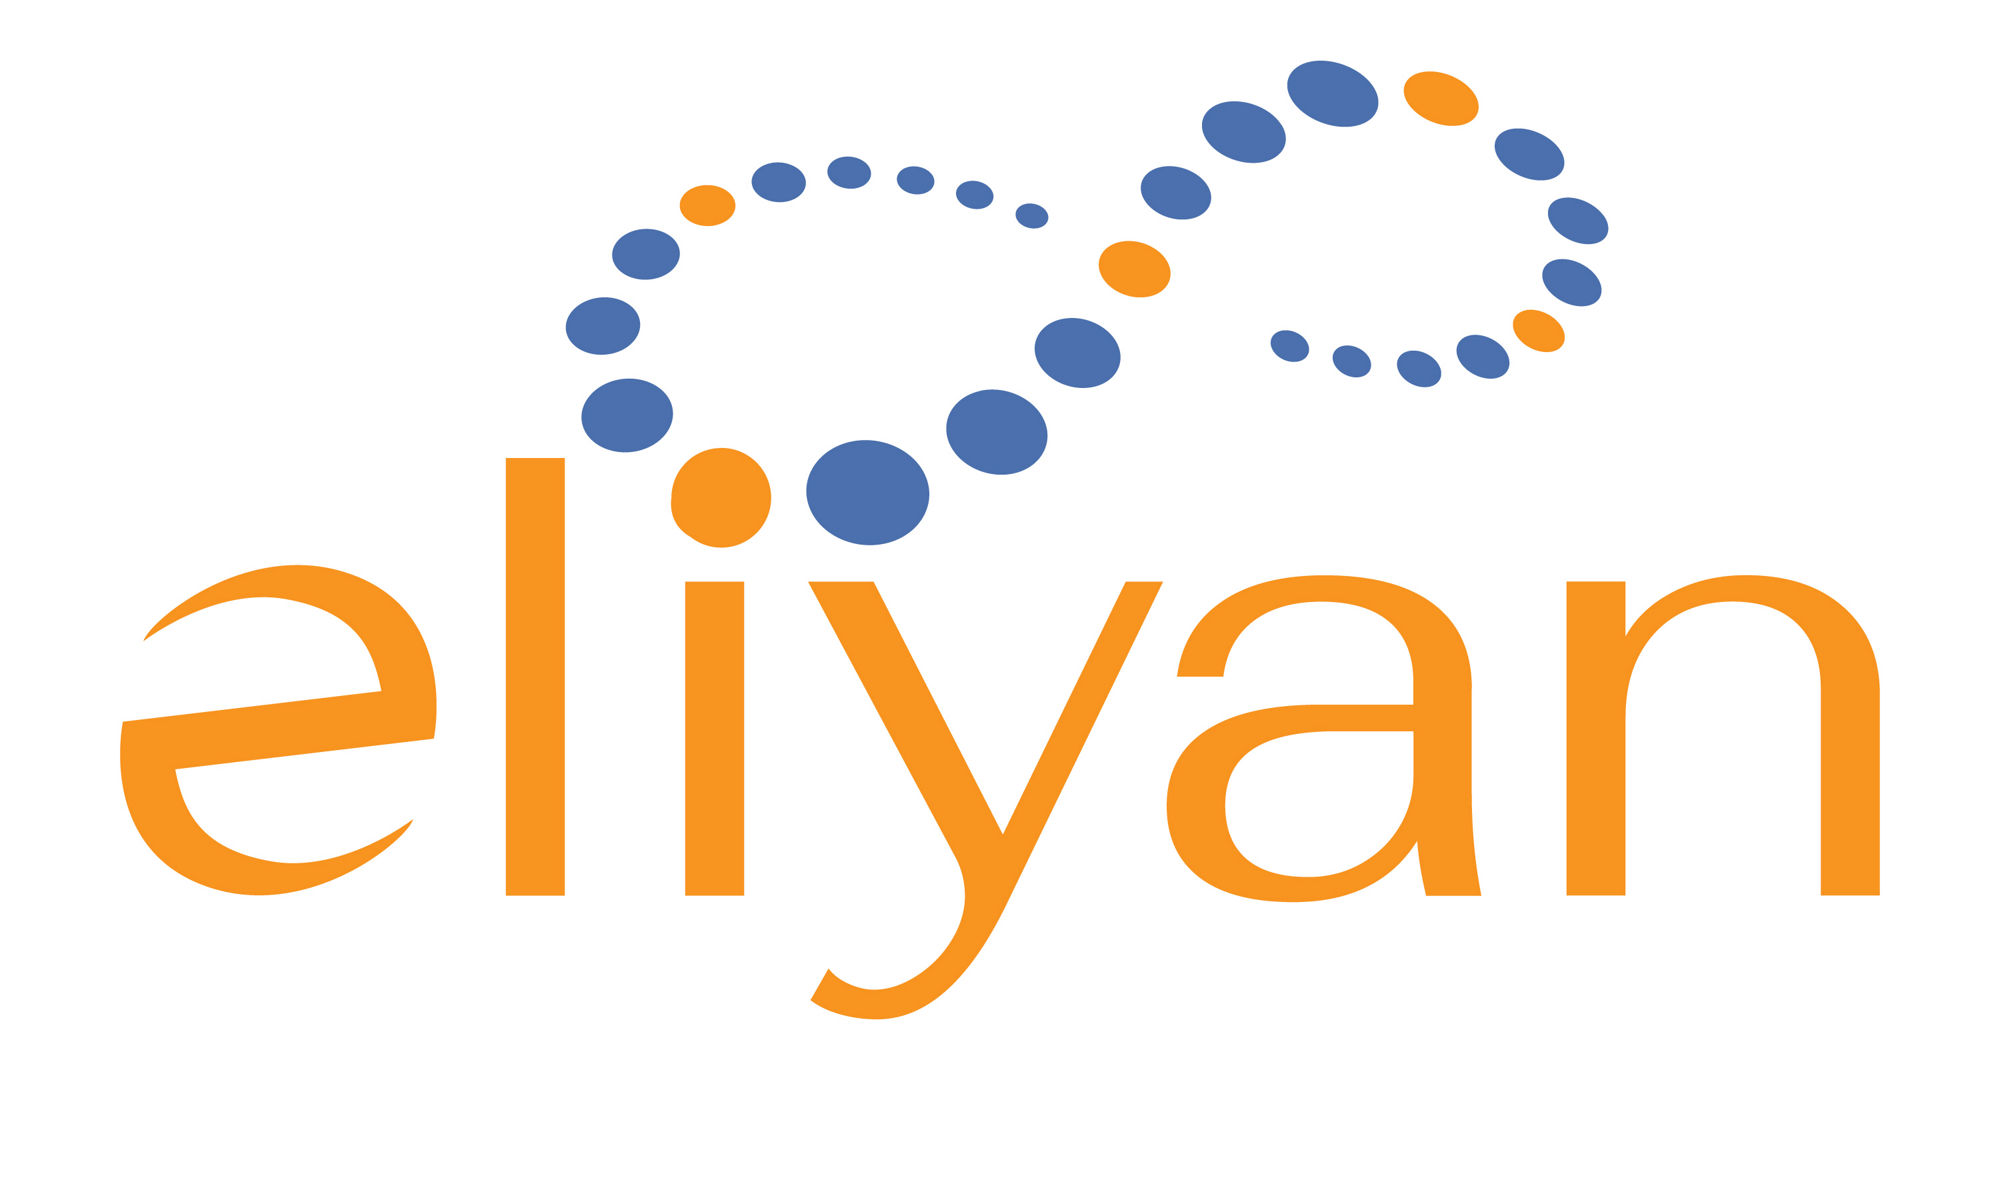 Eliyan company logo